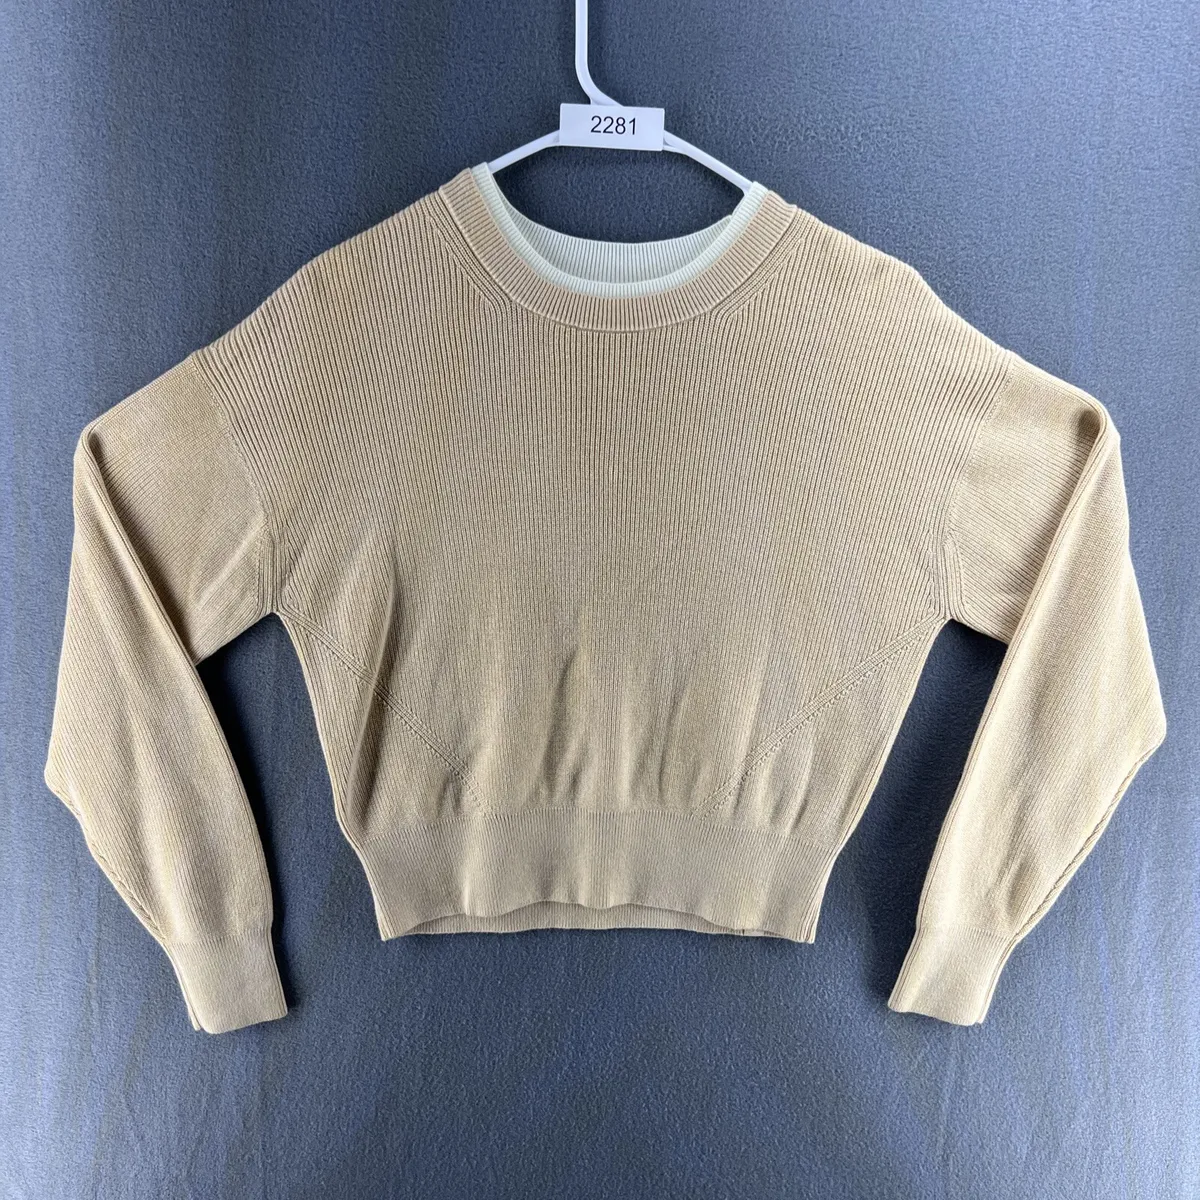 Lululemon Waist Length Crewneck Sweater - Prosecco / Lemon Sorbet